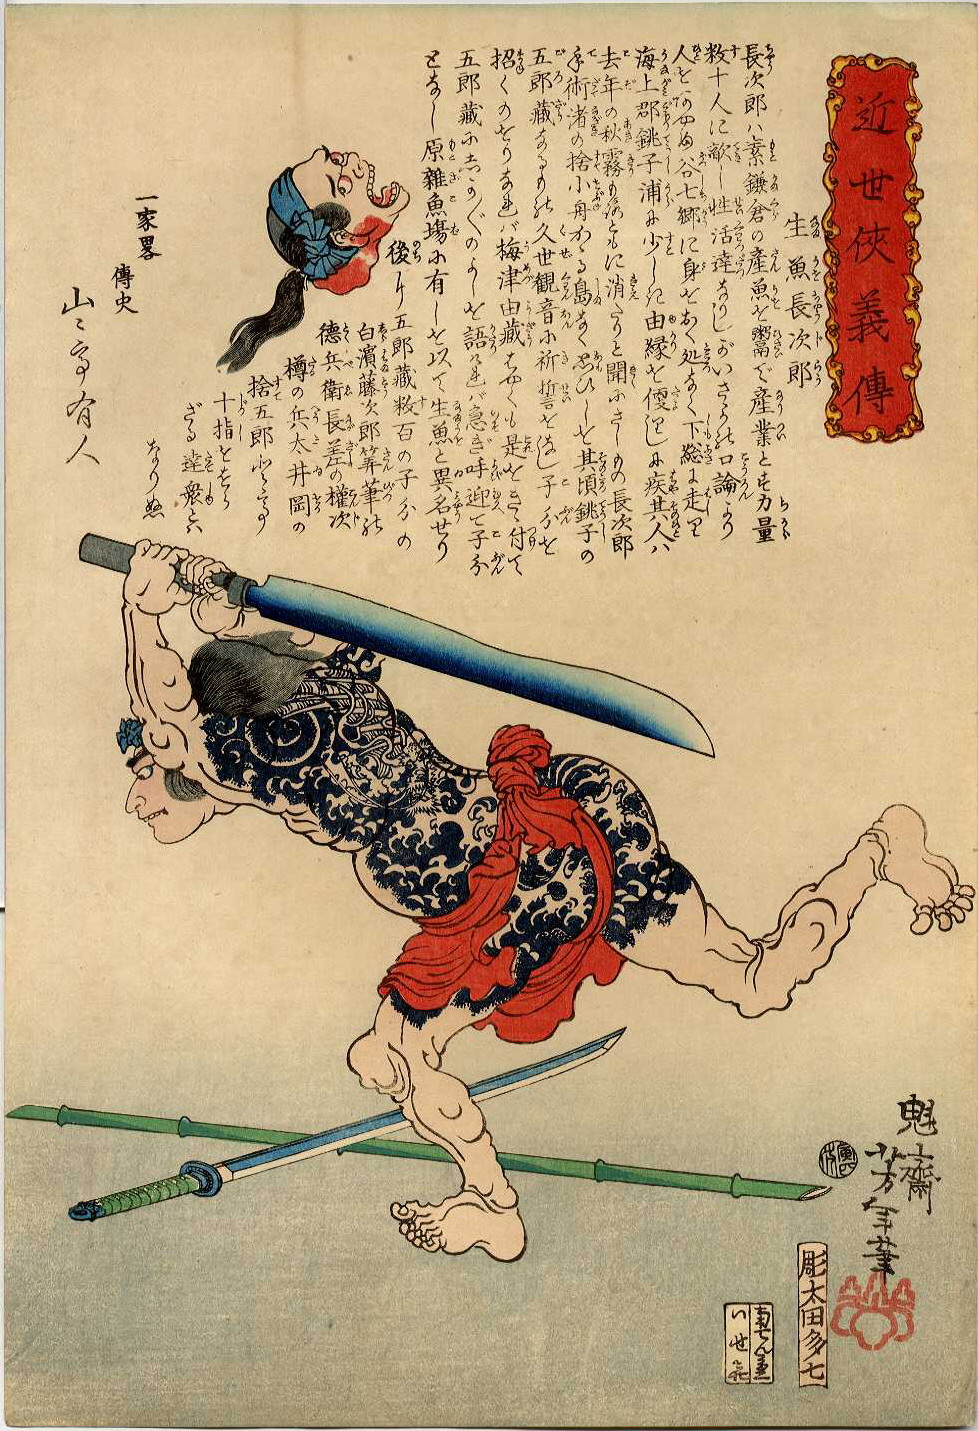 Yoshitoshi - Namauo Chōjirō running with a huge blade - Biographies of Modern Men